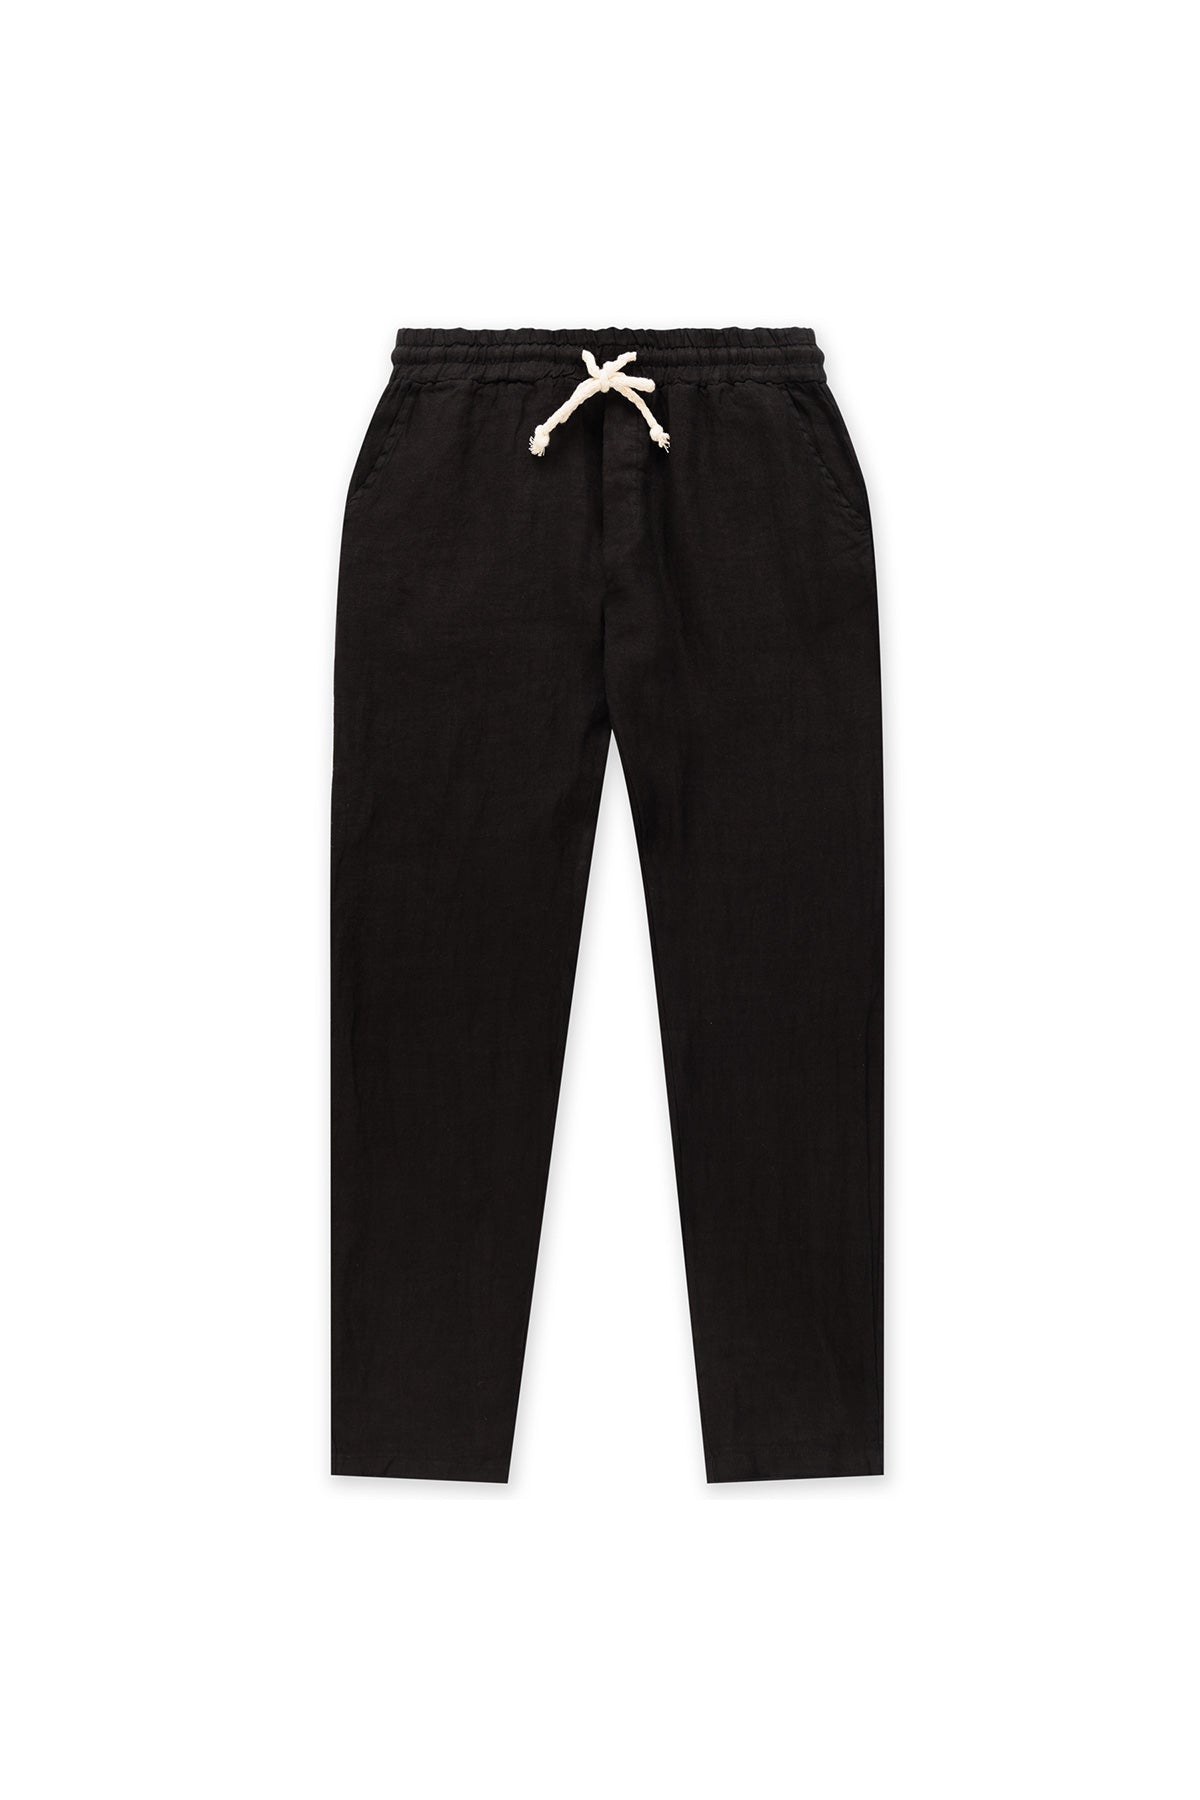 Black Tailored Linen Pants - Polonio